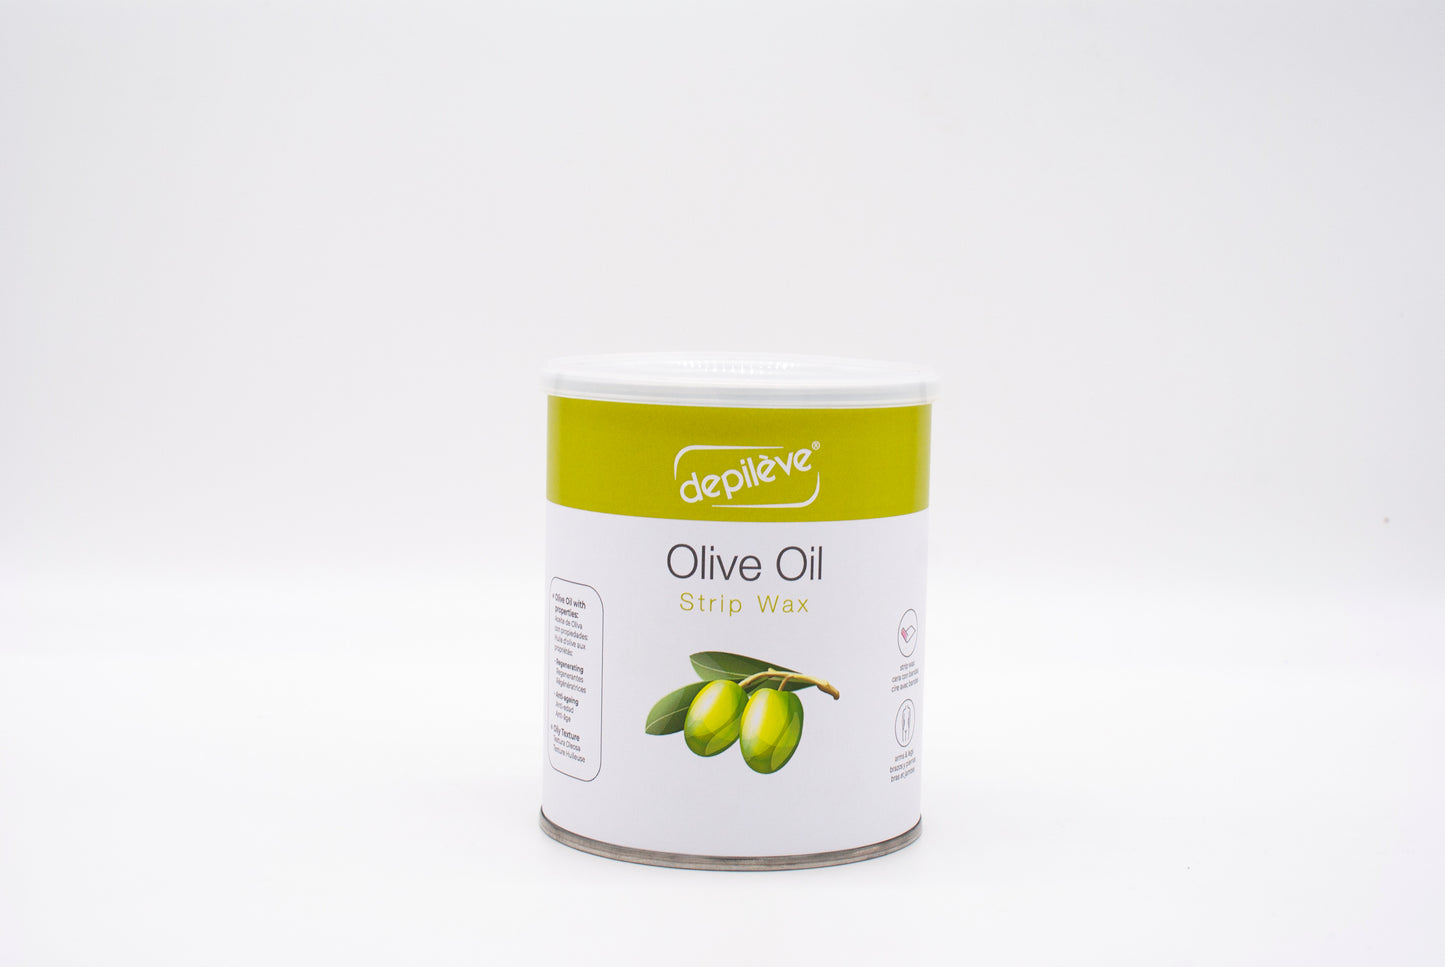 DEPILEVE ROSIN Olive Oil Wax 800g / Vasks ar olīvu eļļu